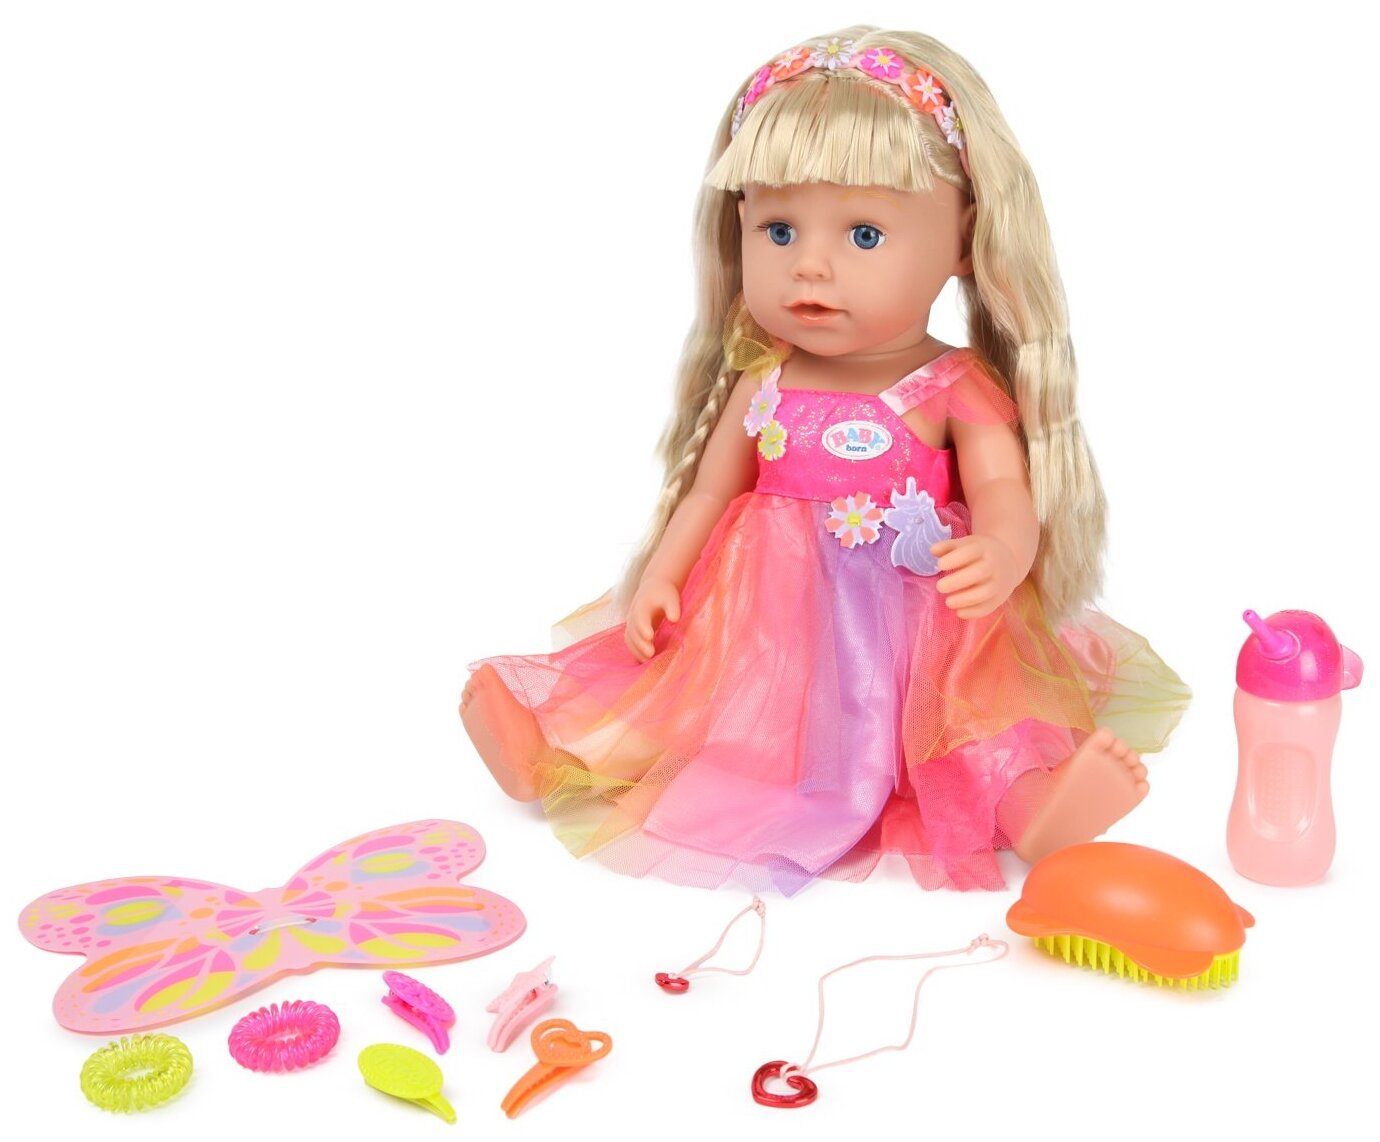 Интерактивная кукла Zapf Creation Baby Born Soft Touch в платье единорога 43 см 833-711